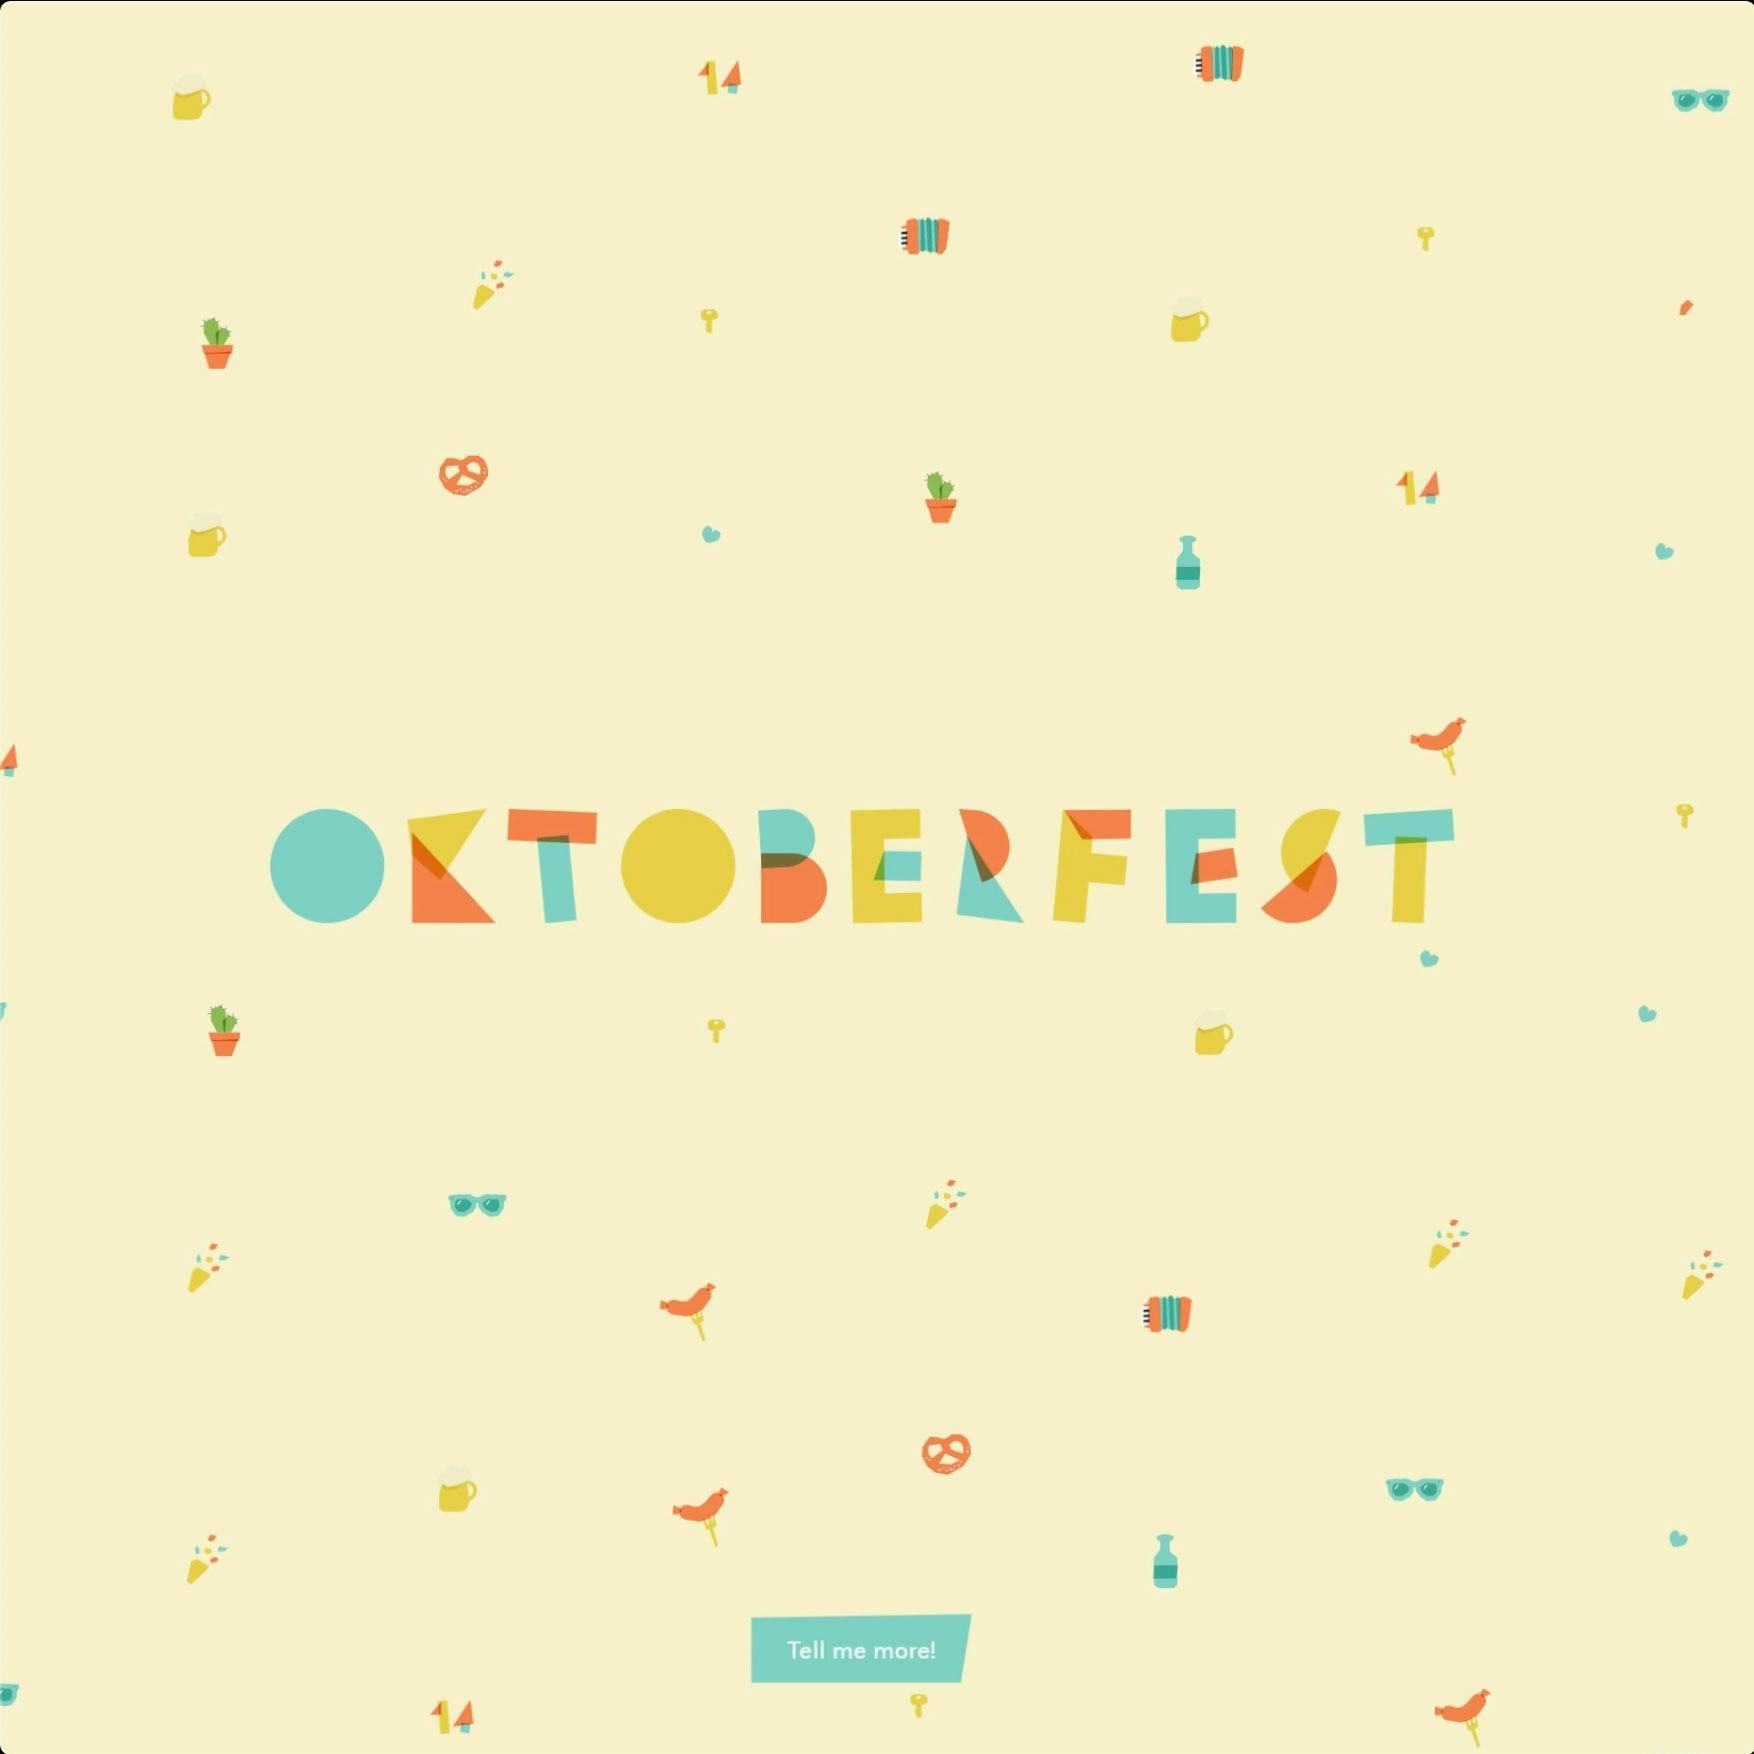 Oktoberfest web experience